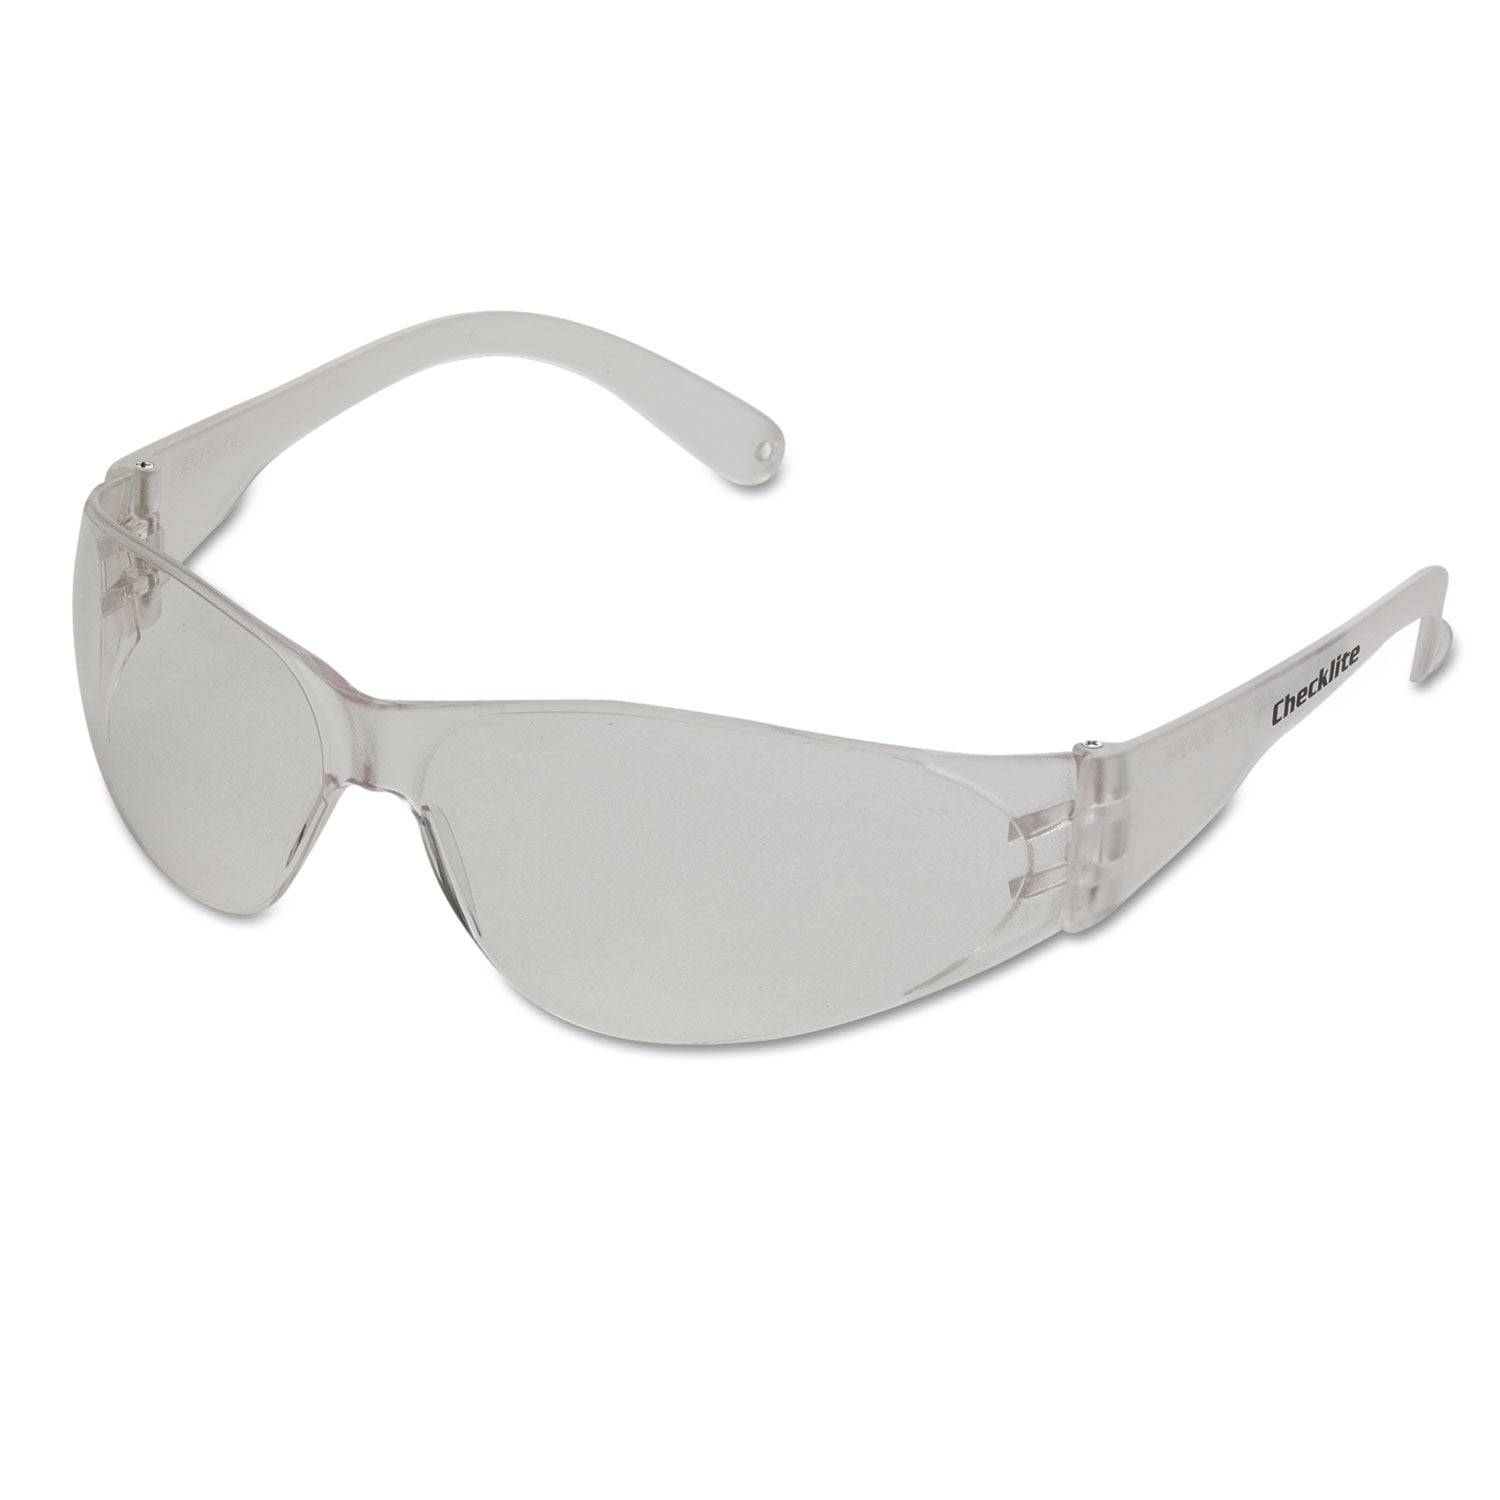 Checklite Safety Glasses, Clear Frame, Anti-Fog Lens - 